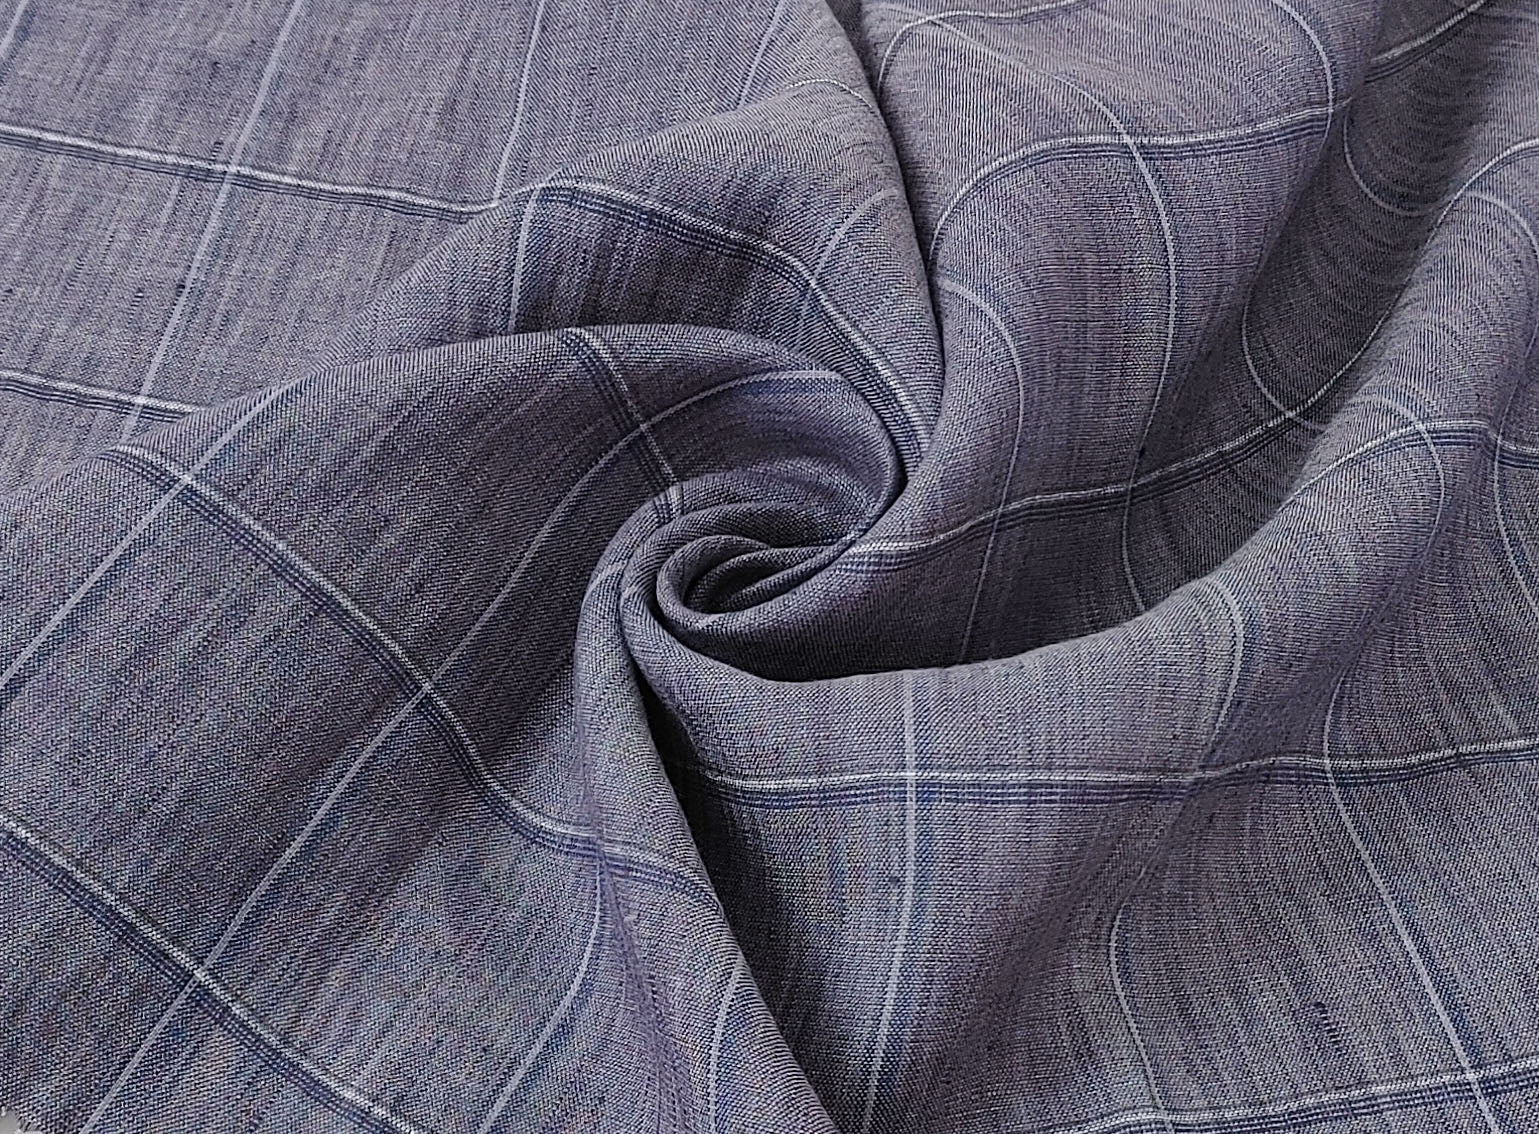 Lightweight Grey Window Pane Check: 100% Linen Fabric 3850 - The Linen Lab - Gray